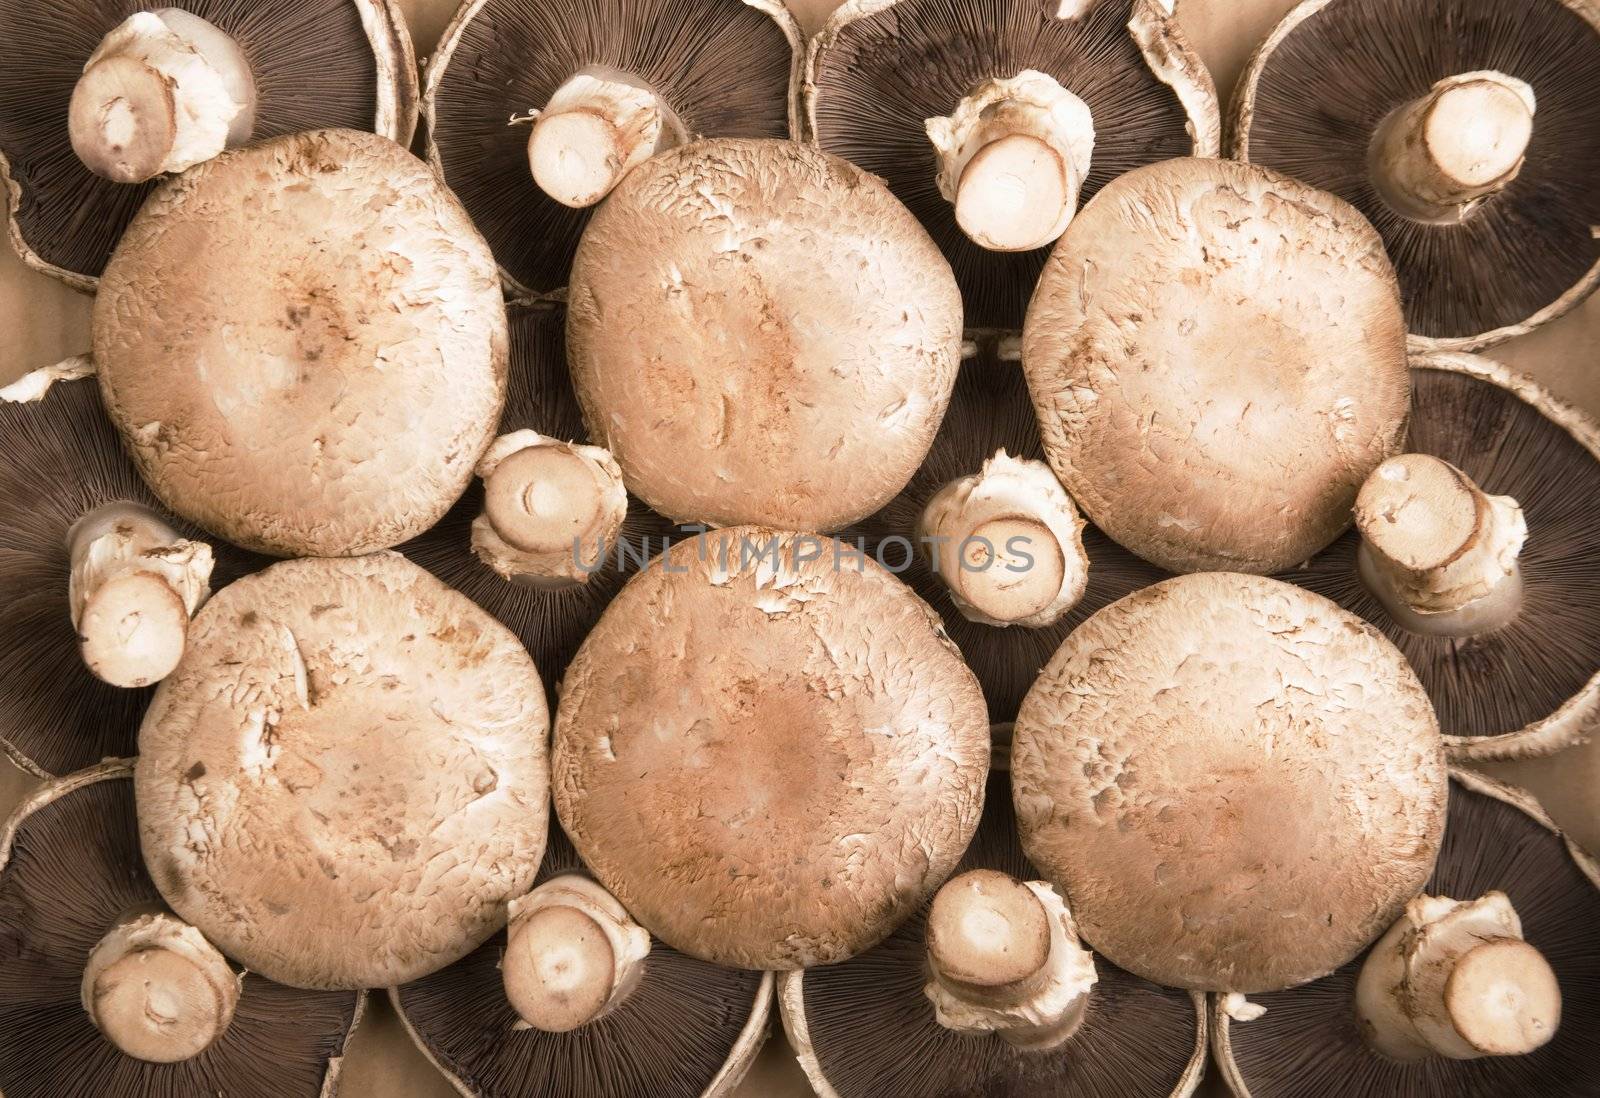 Portobello Mushrooms arranged in a pattern on a cardboard background